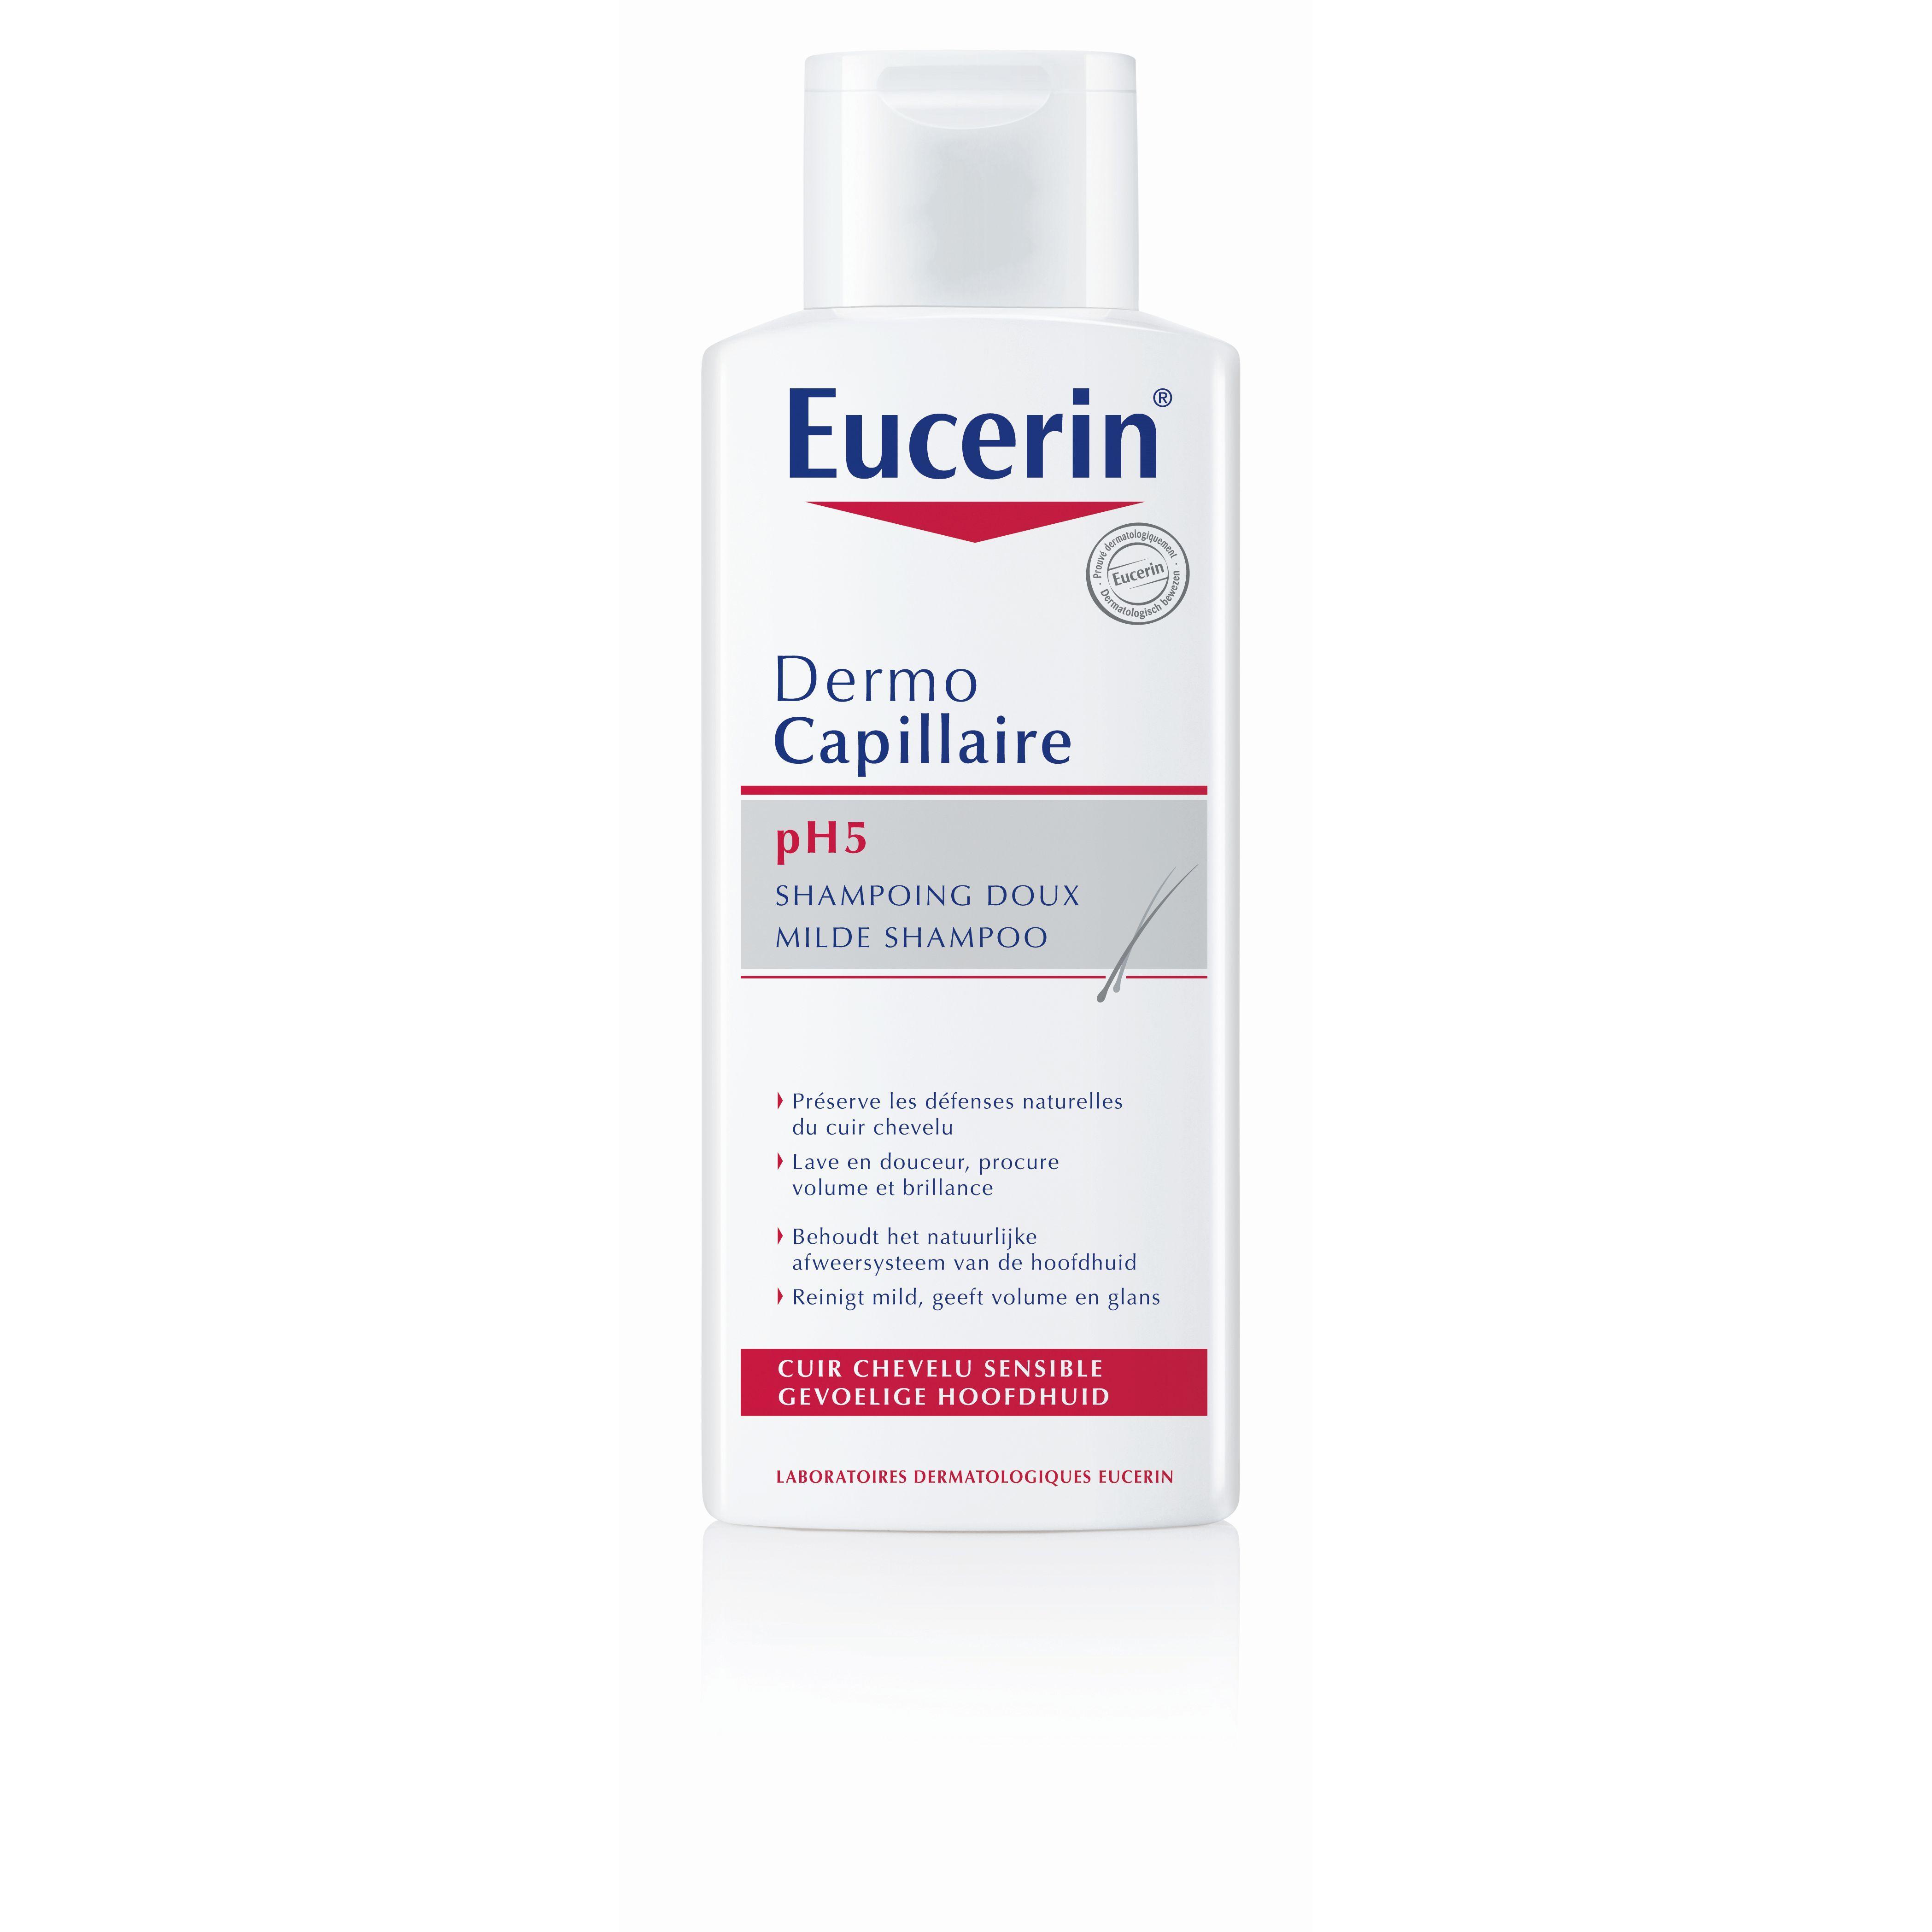 Eucerin DermoCapillaire pH5 Milde Shampoo 250ml